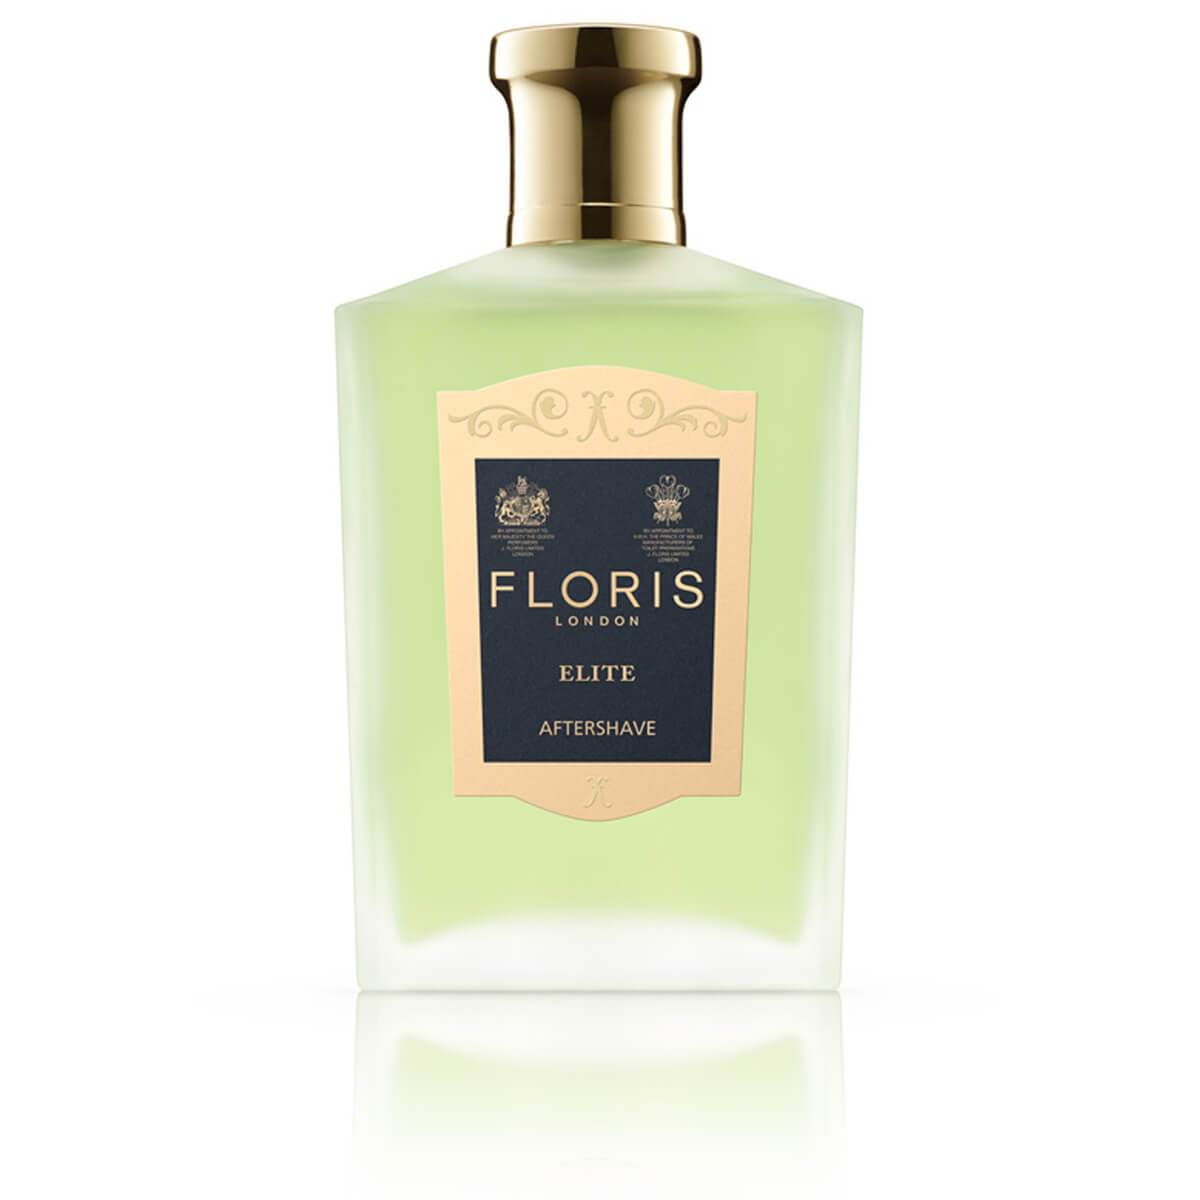 Green liquid in clear glass bottle with floris london logo 